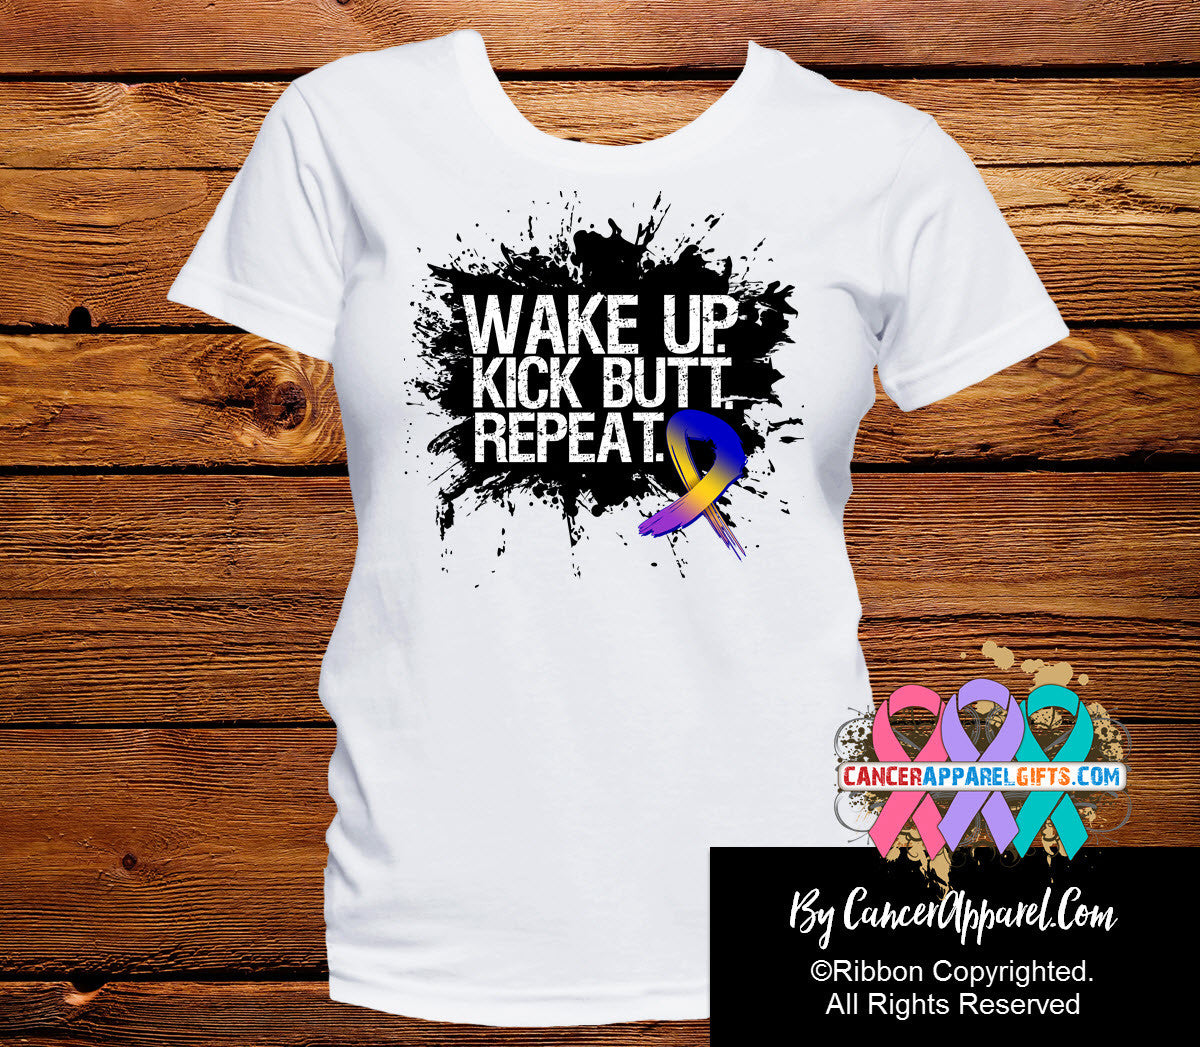 Bladder Cancer Shirts Wake Up Kick Butt and Repeat